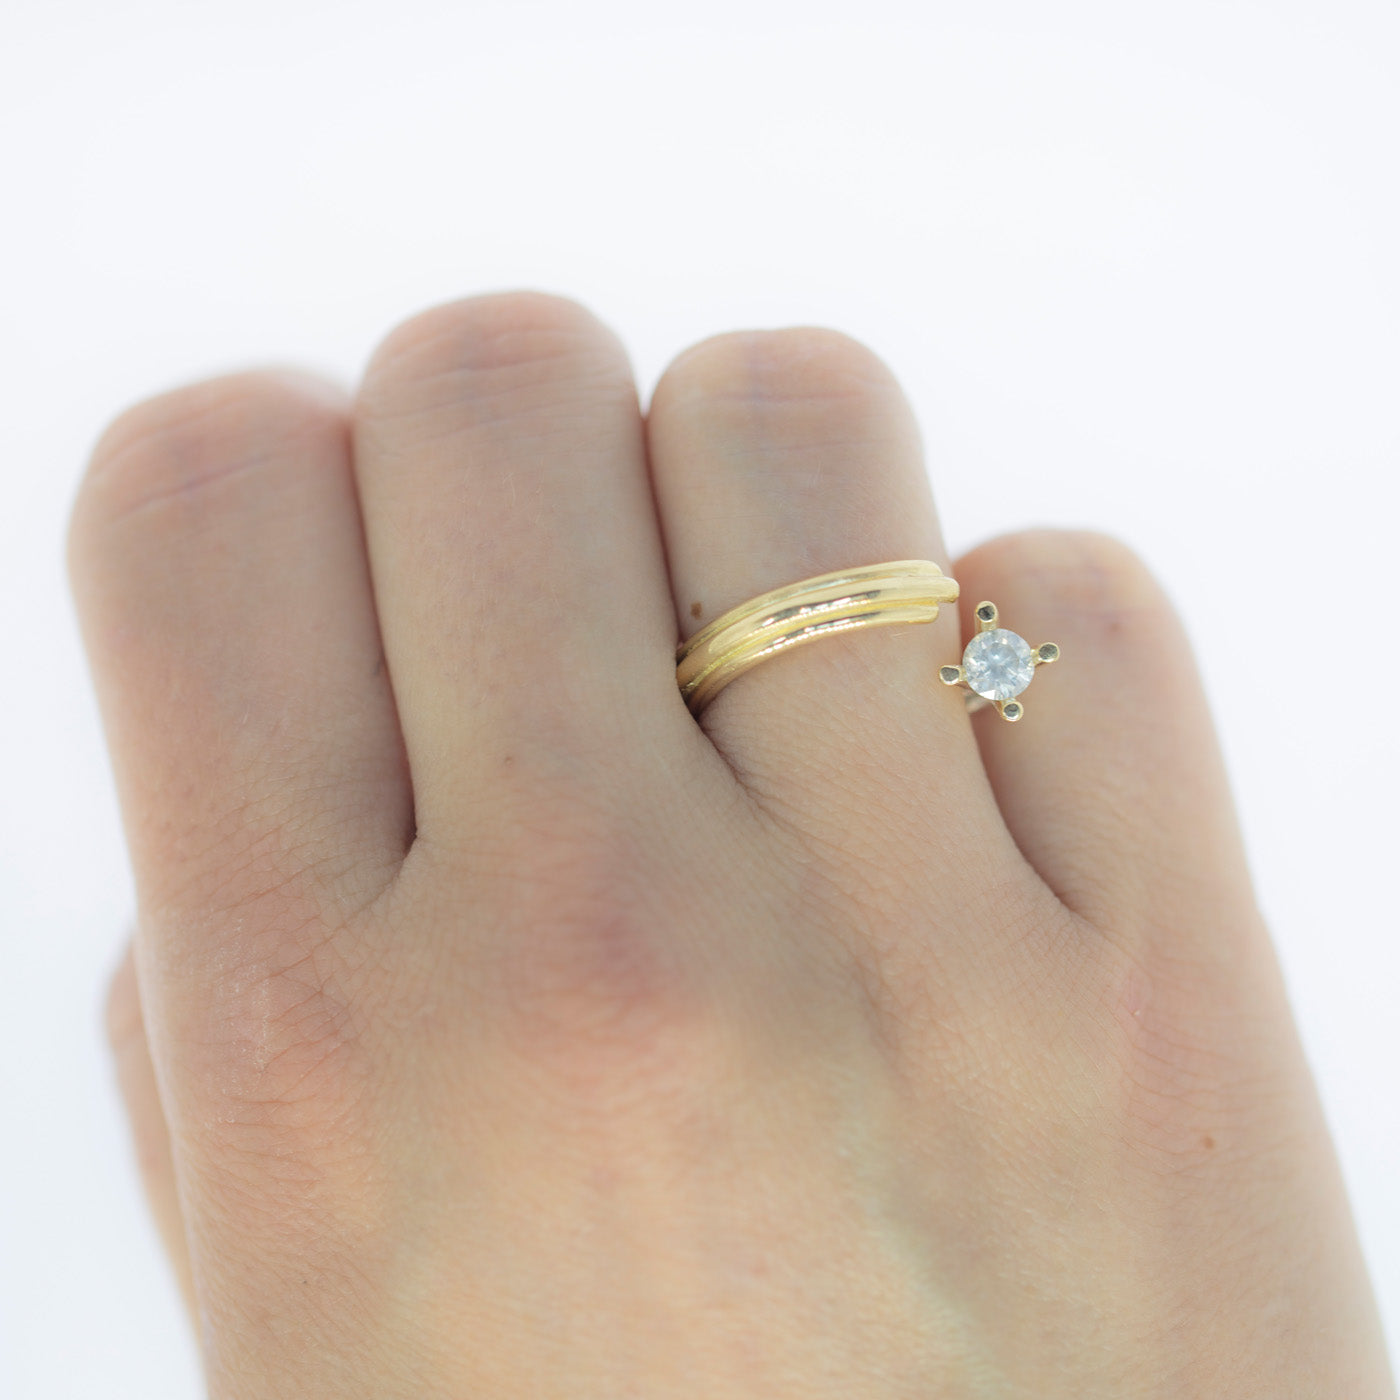 Ring Vortex 18 ct yellow gold 0.43 ct opalescent white diamond innan jewellery independent atelier berlin